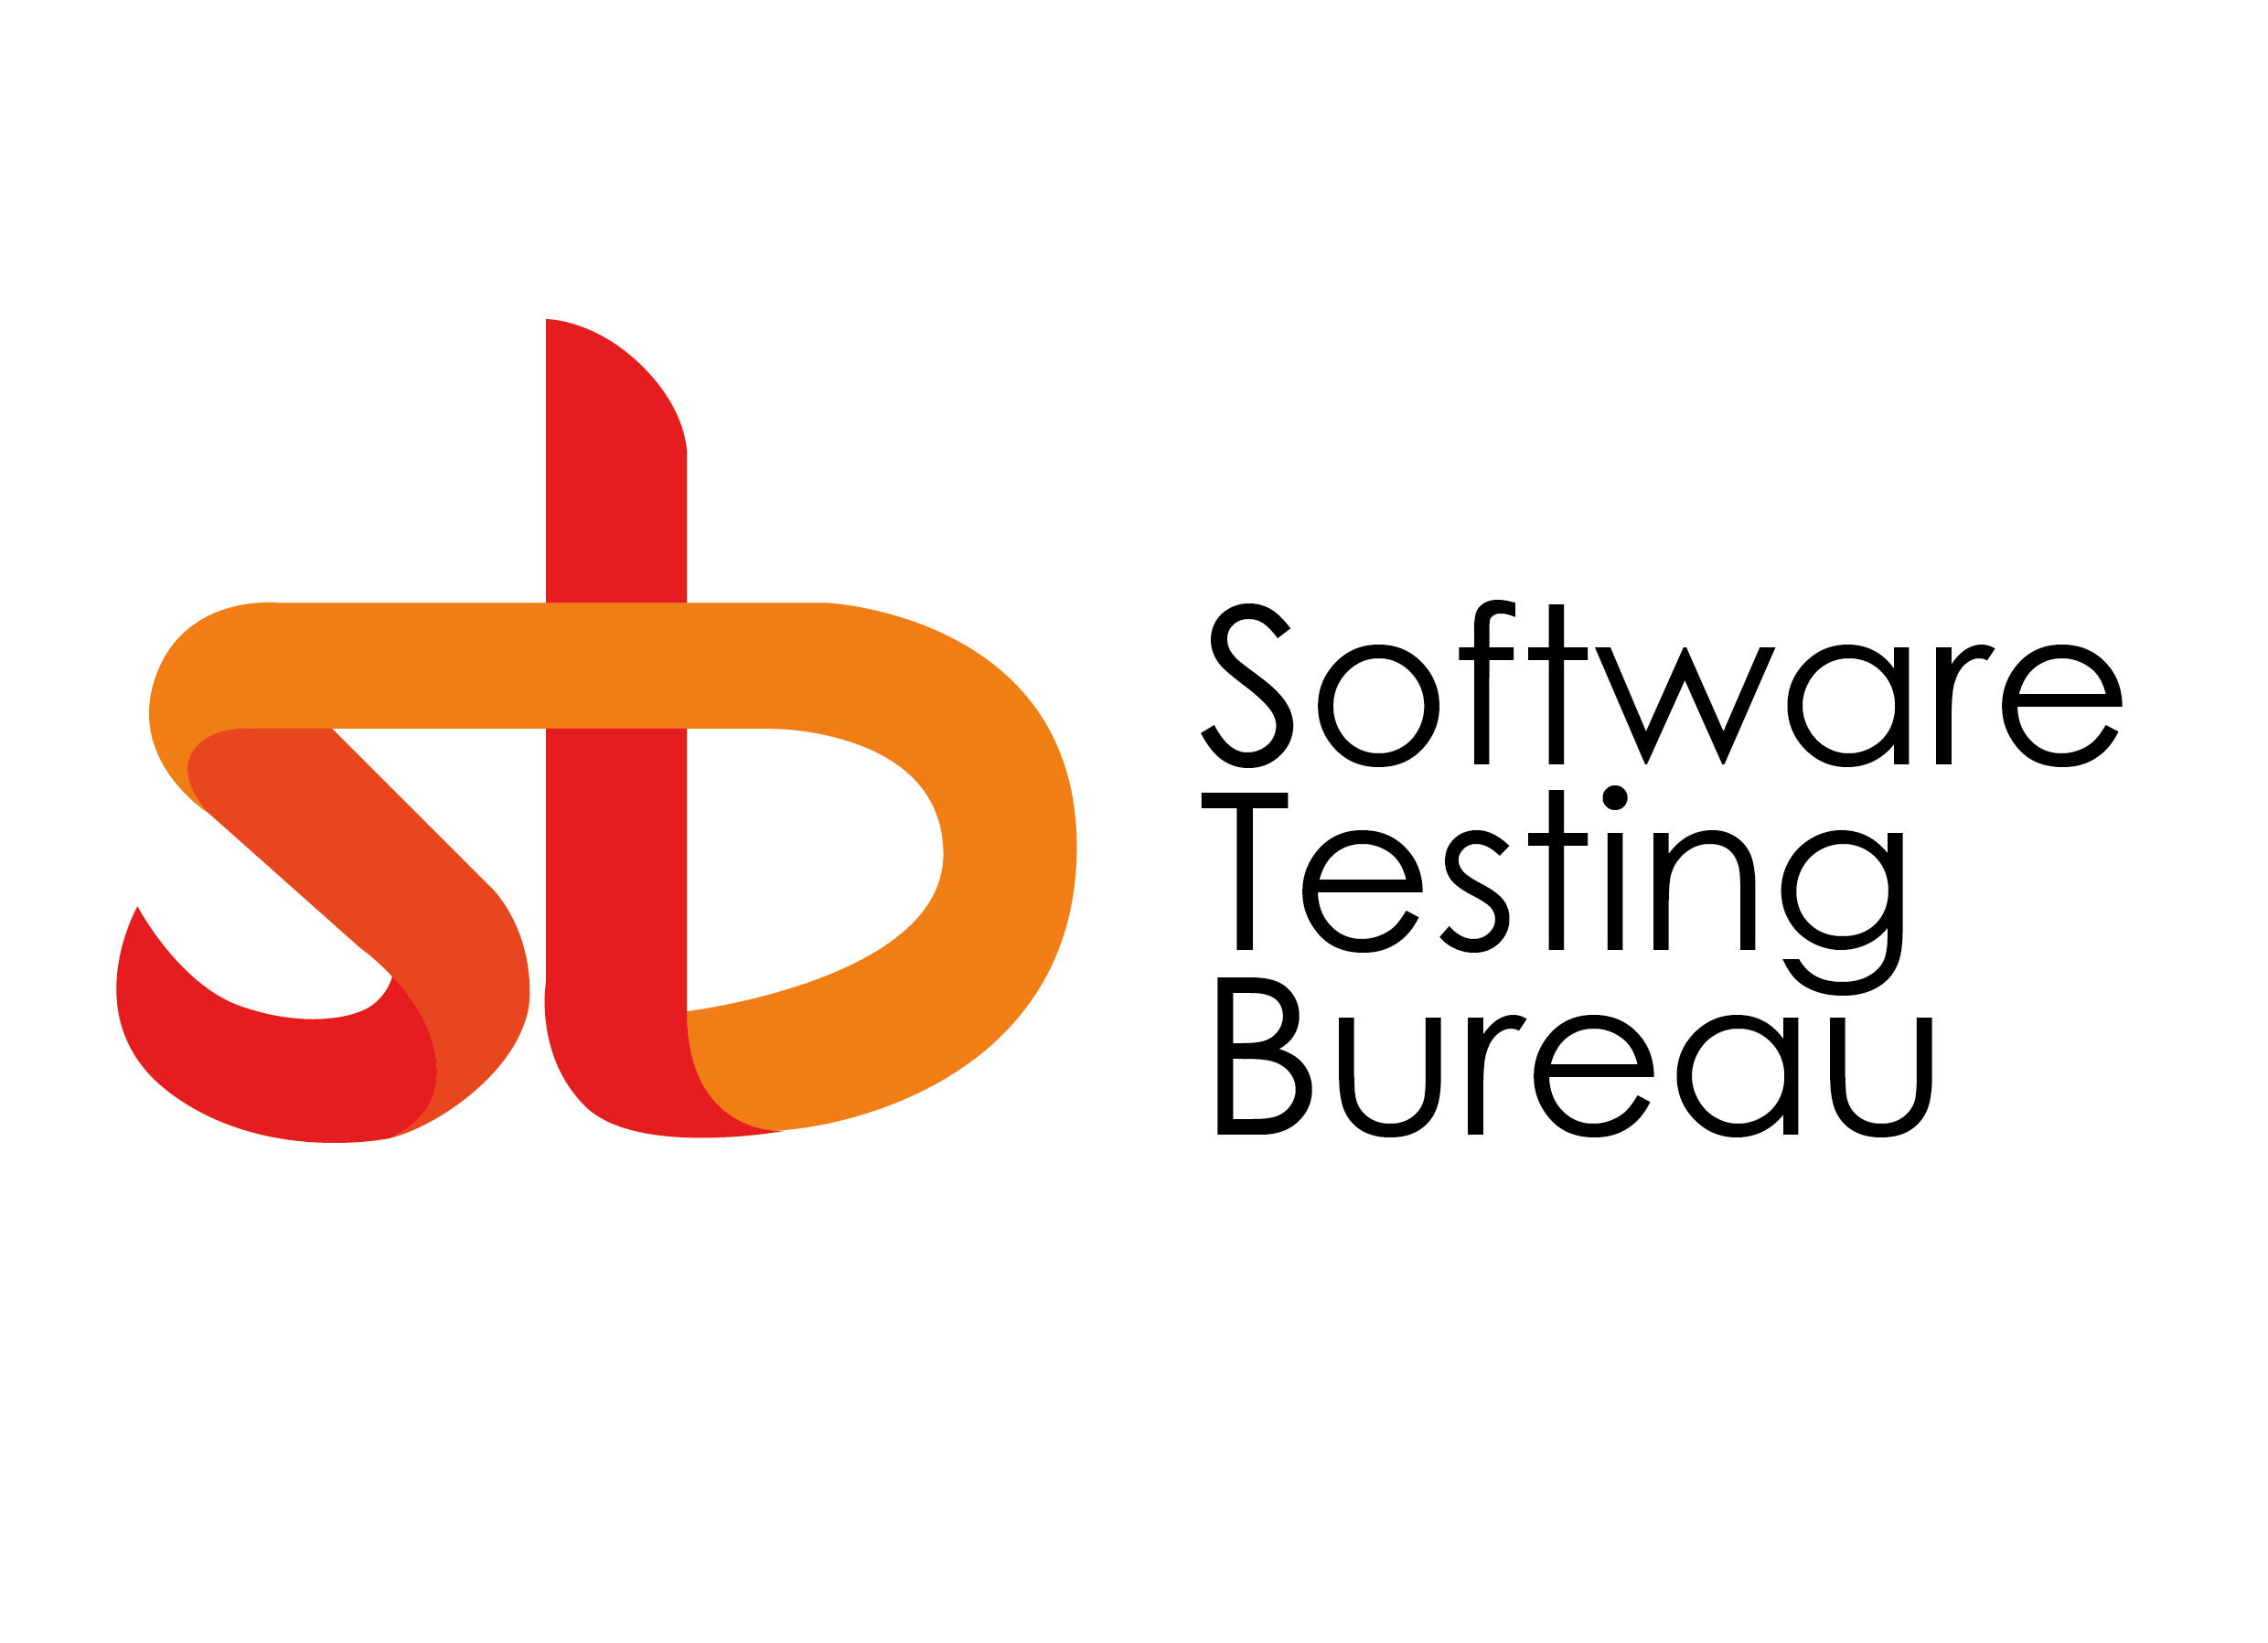 Software Testing Bureau profile on Qualified.One